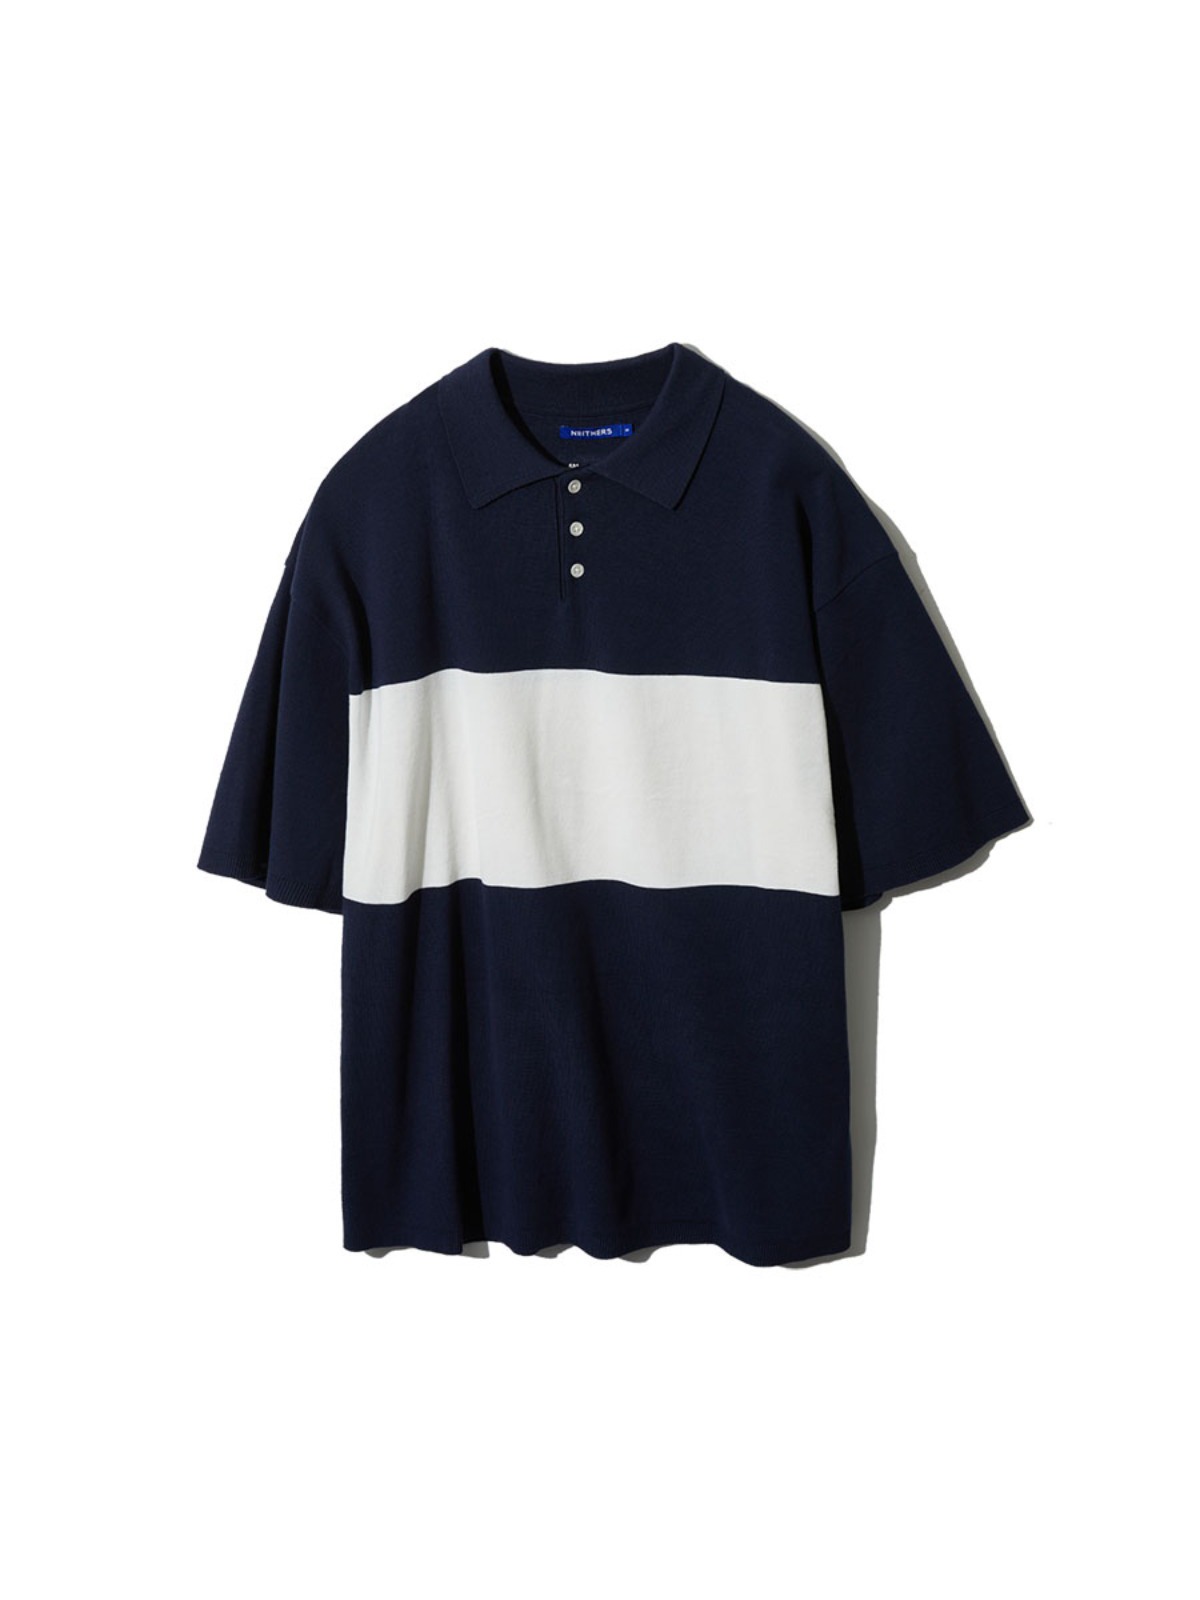 Club Half Knit Shirt (Navy/White)